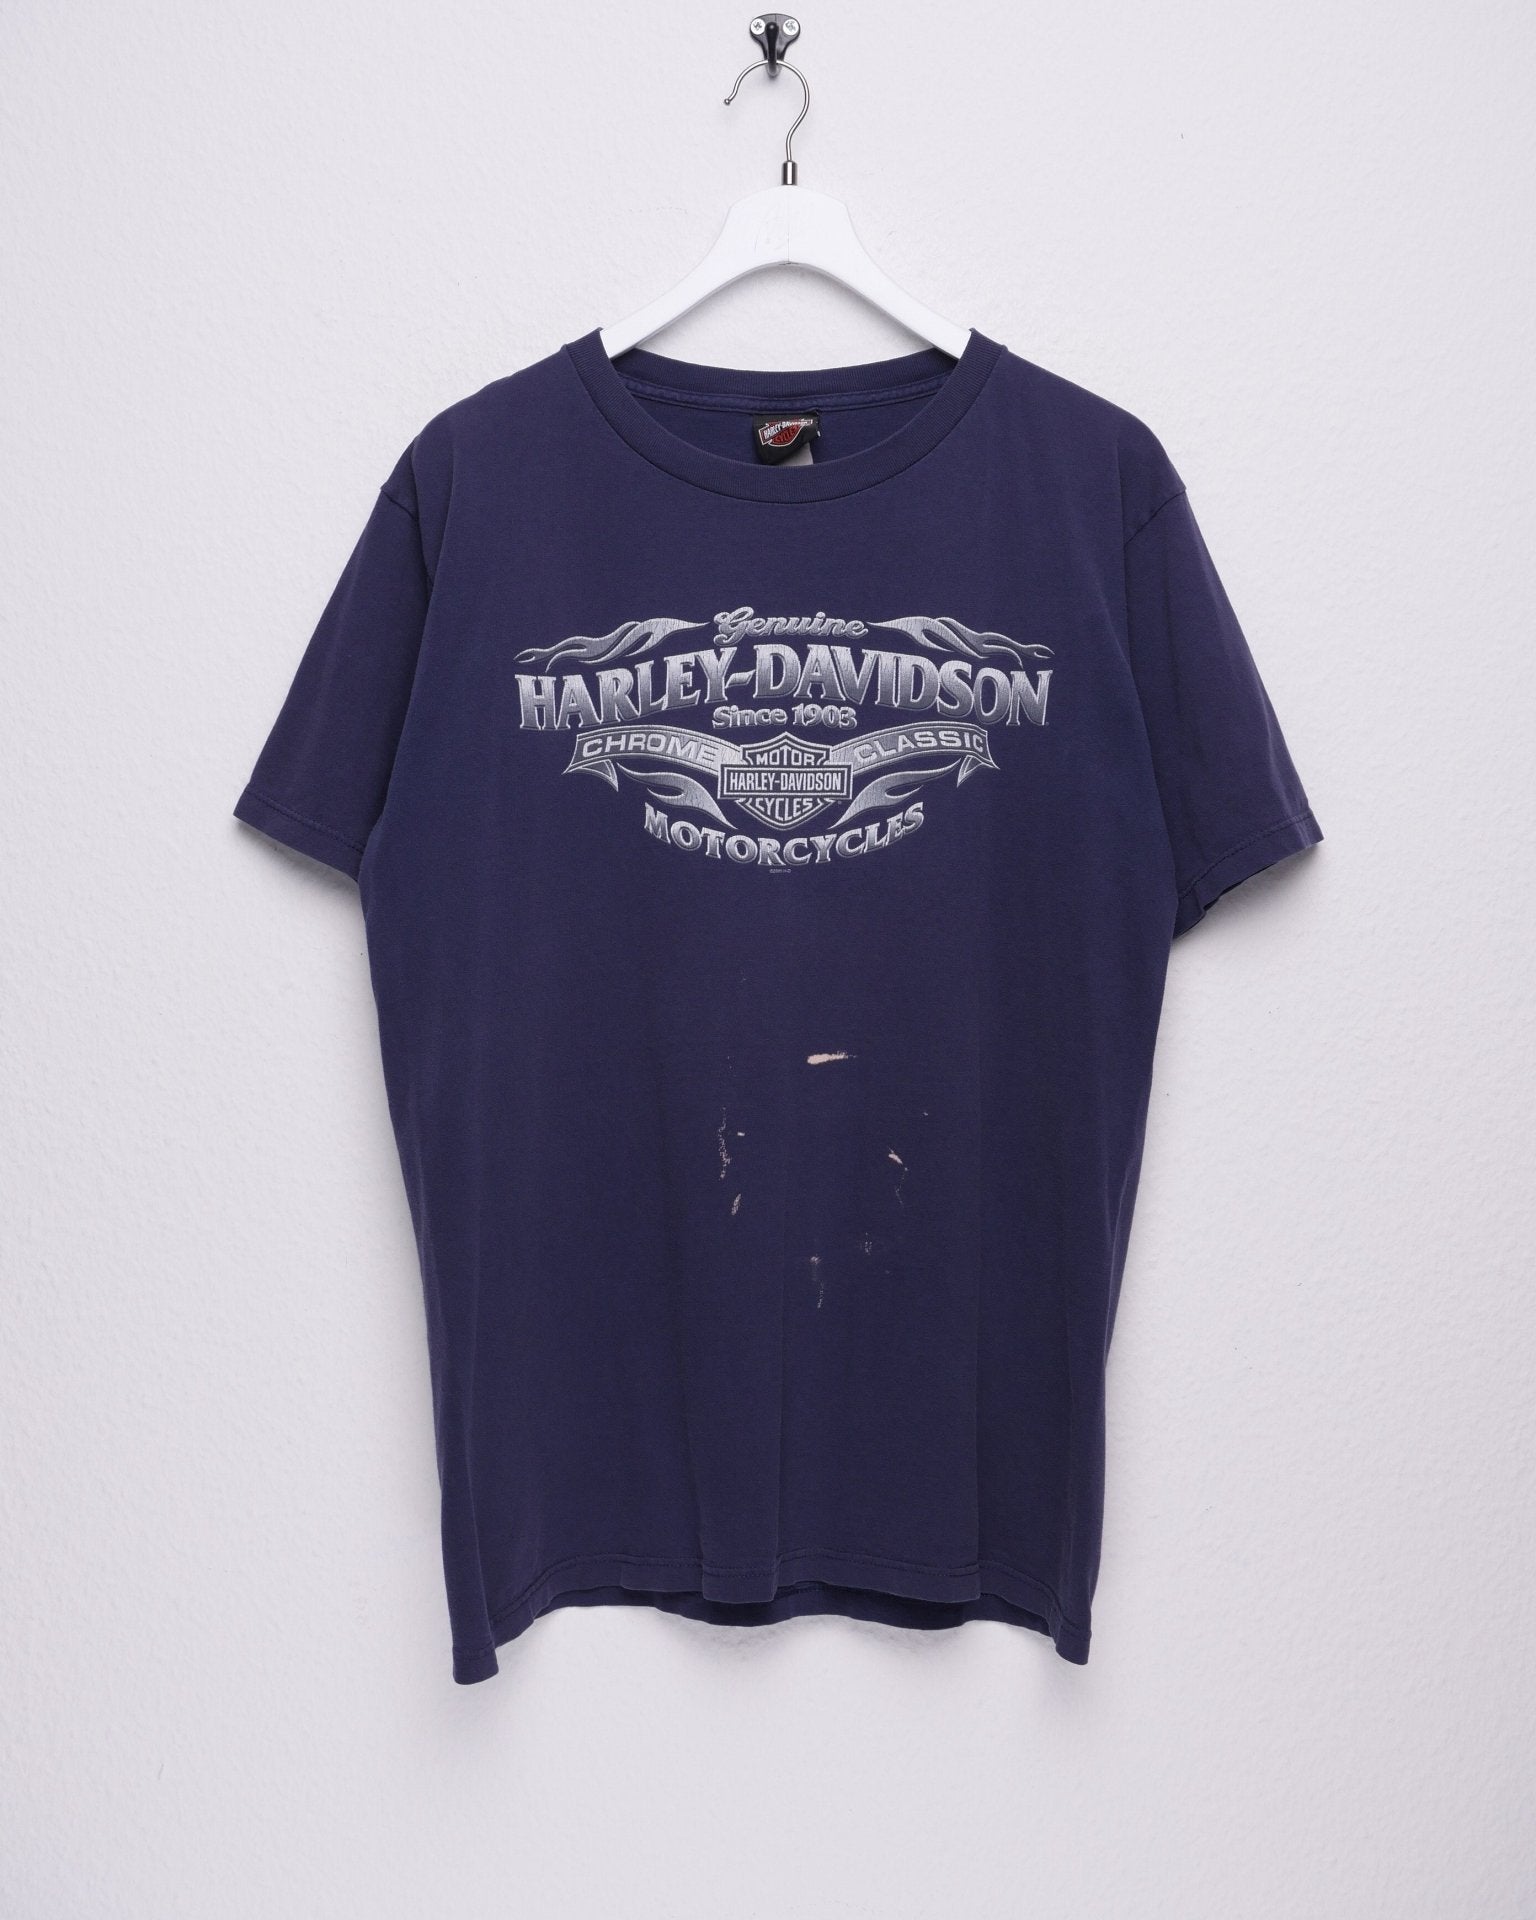 Harley Davidson 'California' printed navy Graphic Shirt - Peeces